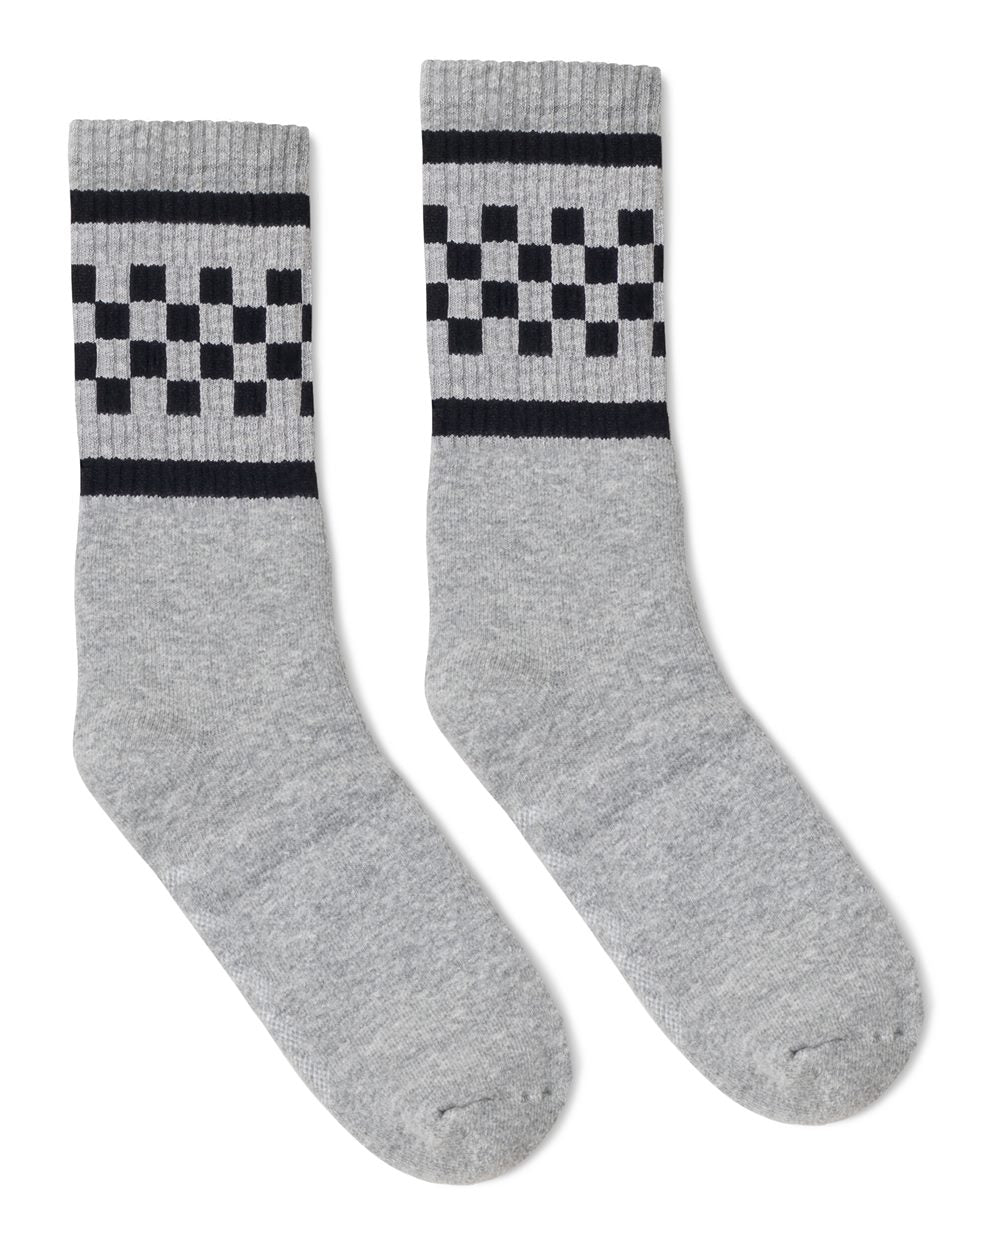 Socco Checkered Crew Socks – Black, Grey, White